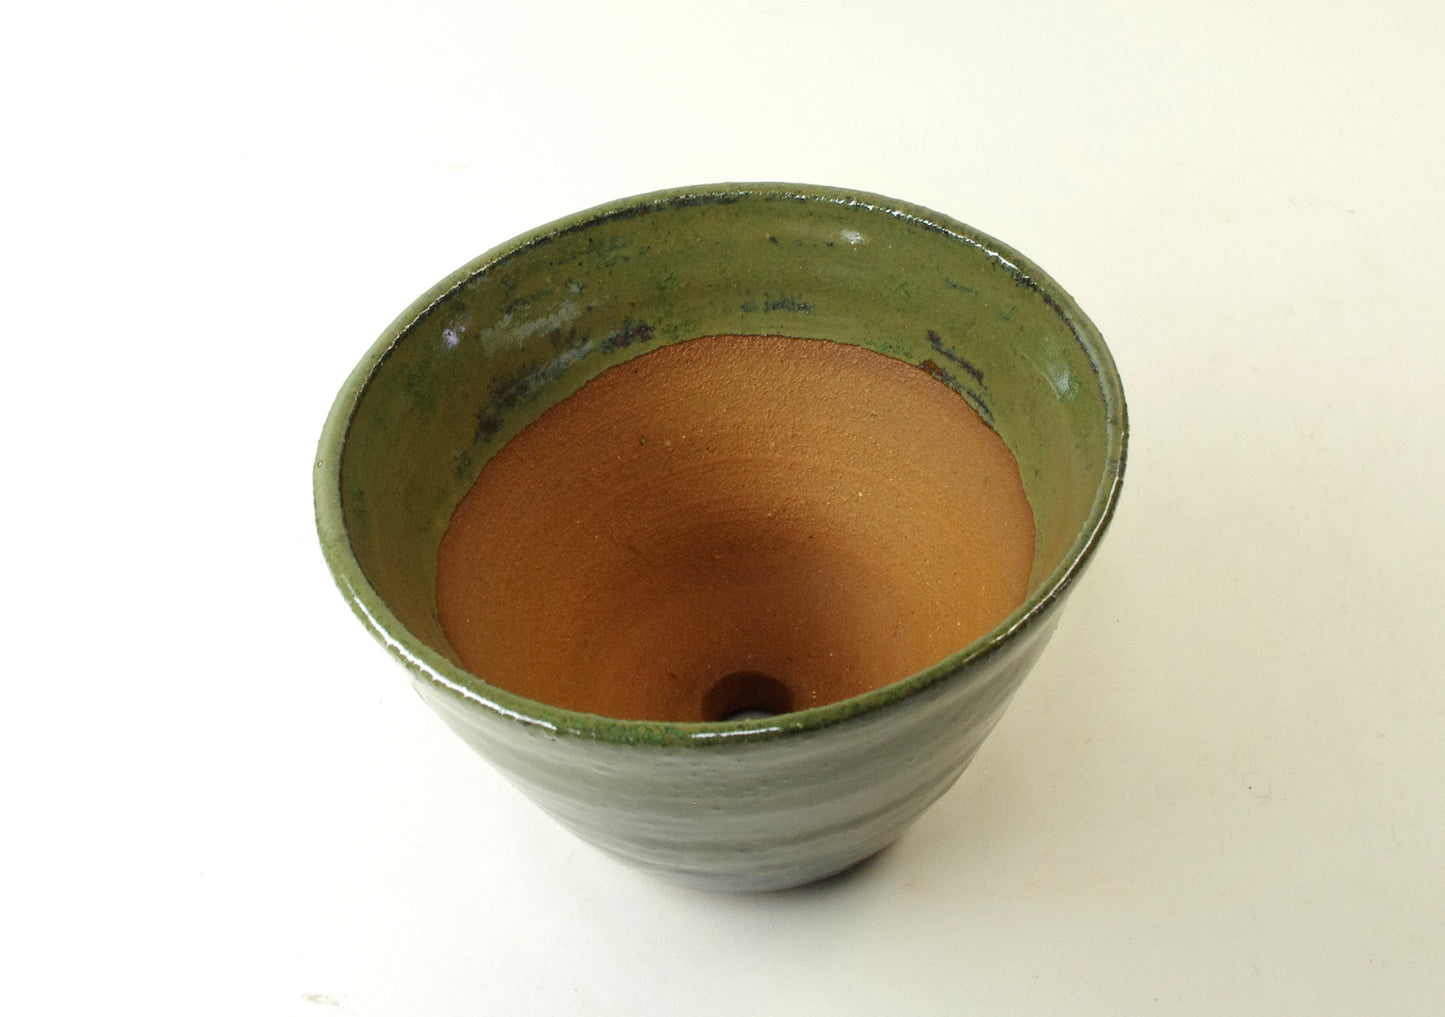 2123, Hand thrown stoneware cactus pot, 4 5/8 x 3 1/8 inches